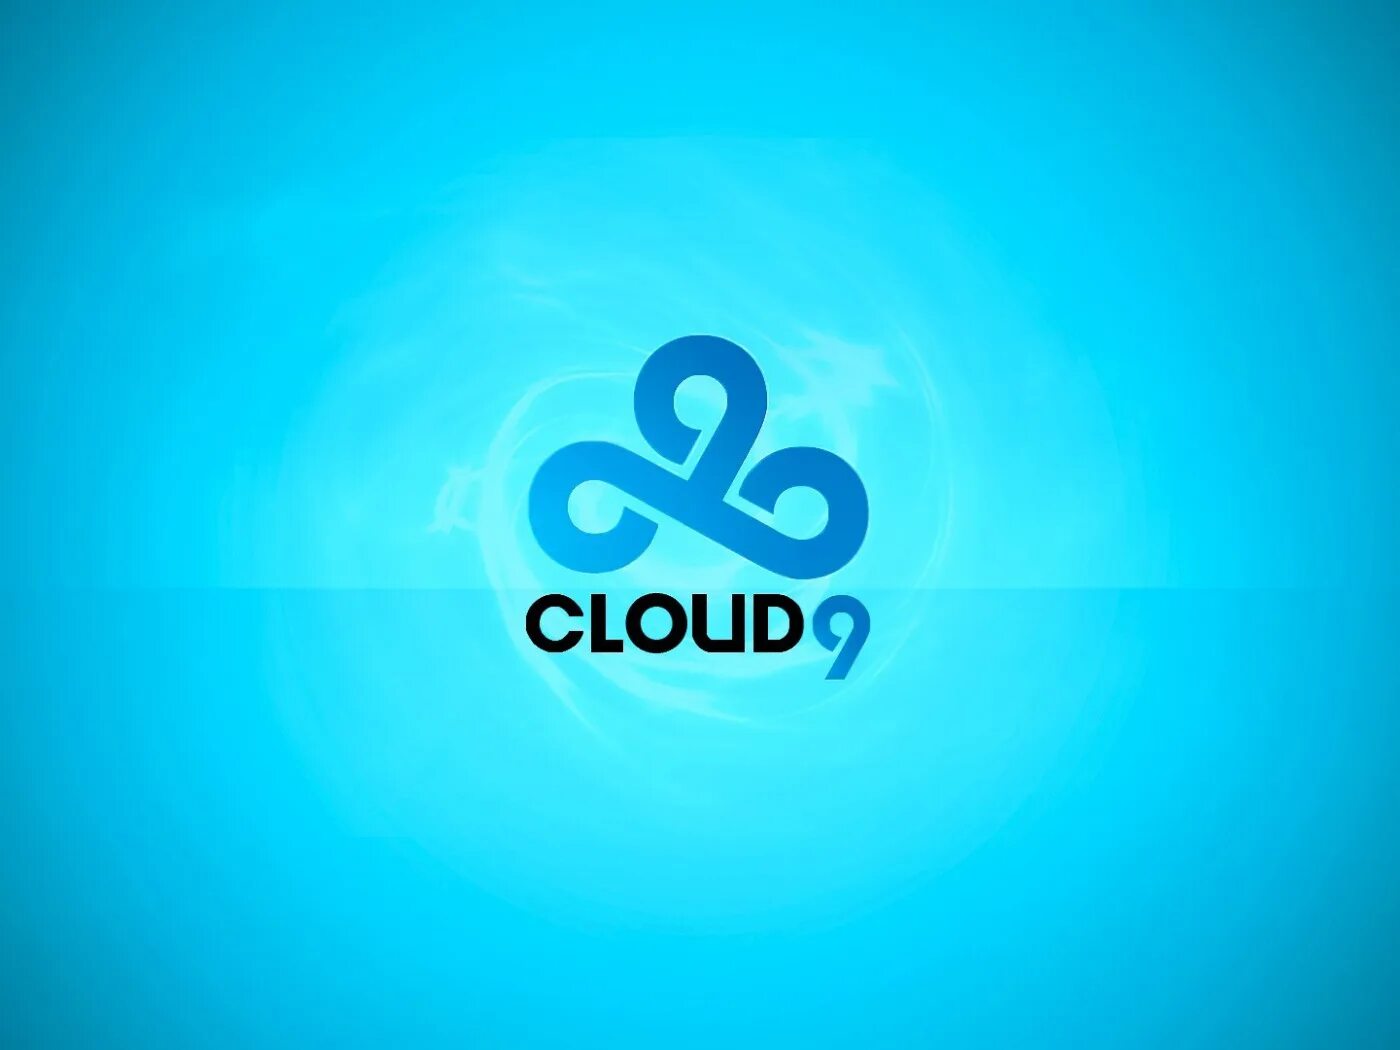 Cloud cs 2. Клауд 9 КС го ава. Cloud9 Team. Команда клоуд9. Логотип cloud9.